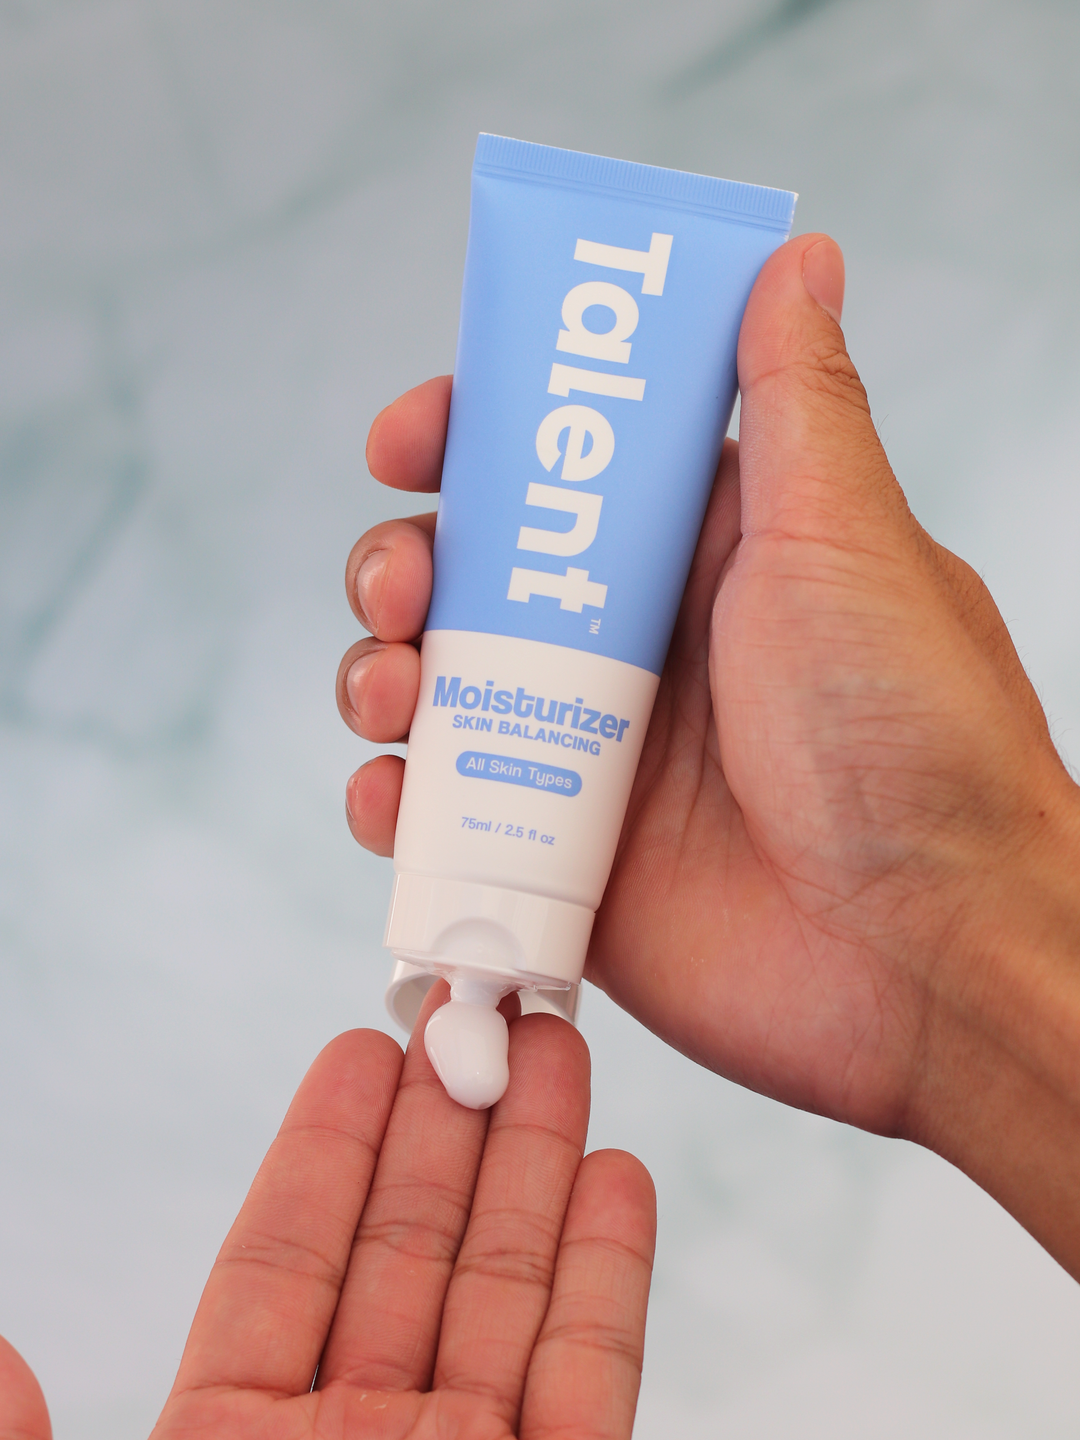 skin balancing moisturizer with cream on hand